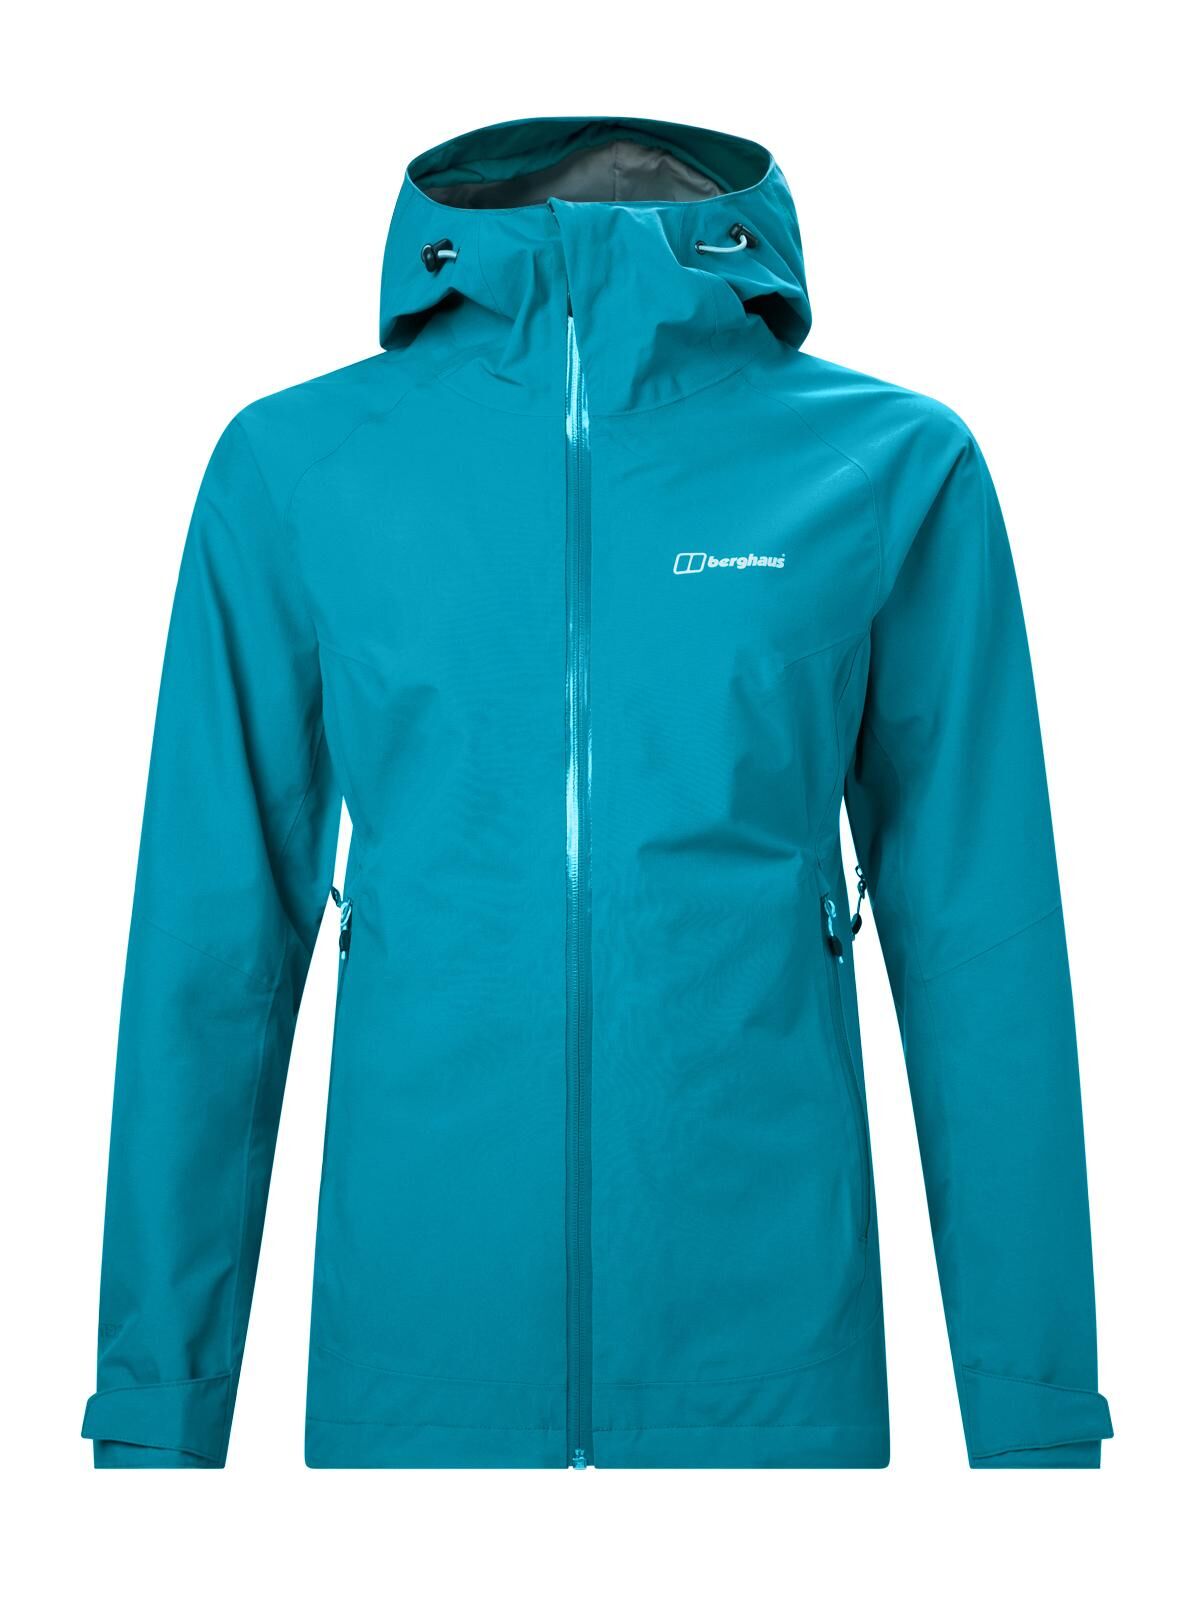 Berghaus Ridgemaster Waterproof GTX Jacket - Waterproof jacket - Women's